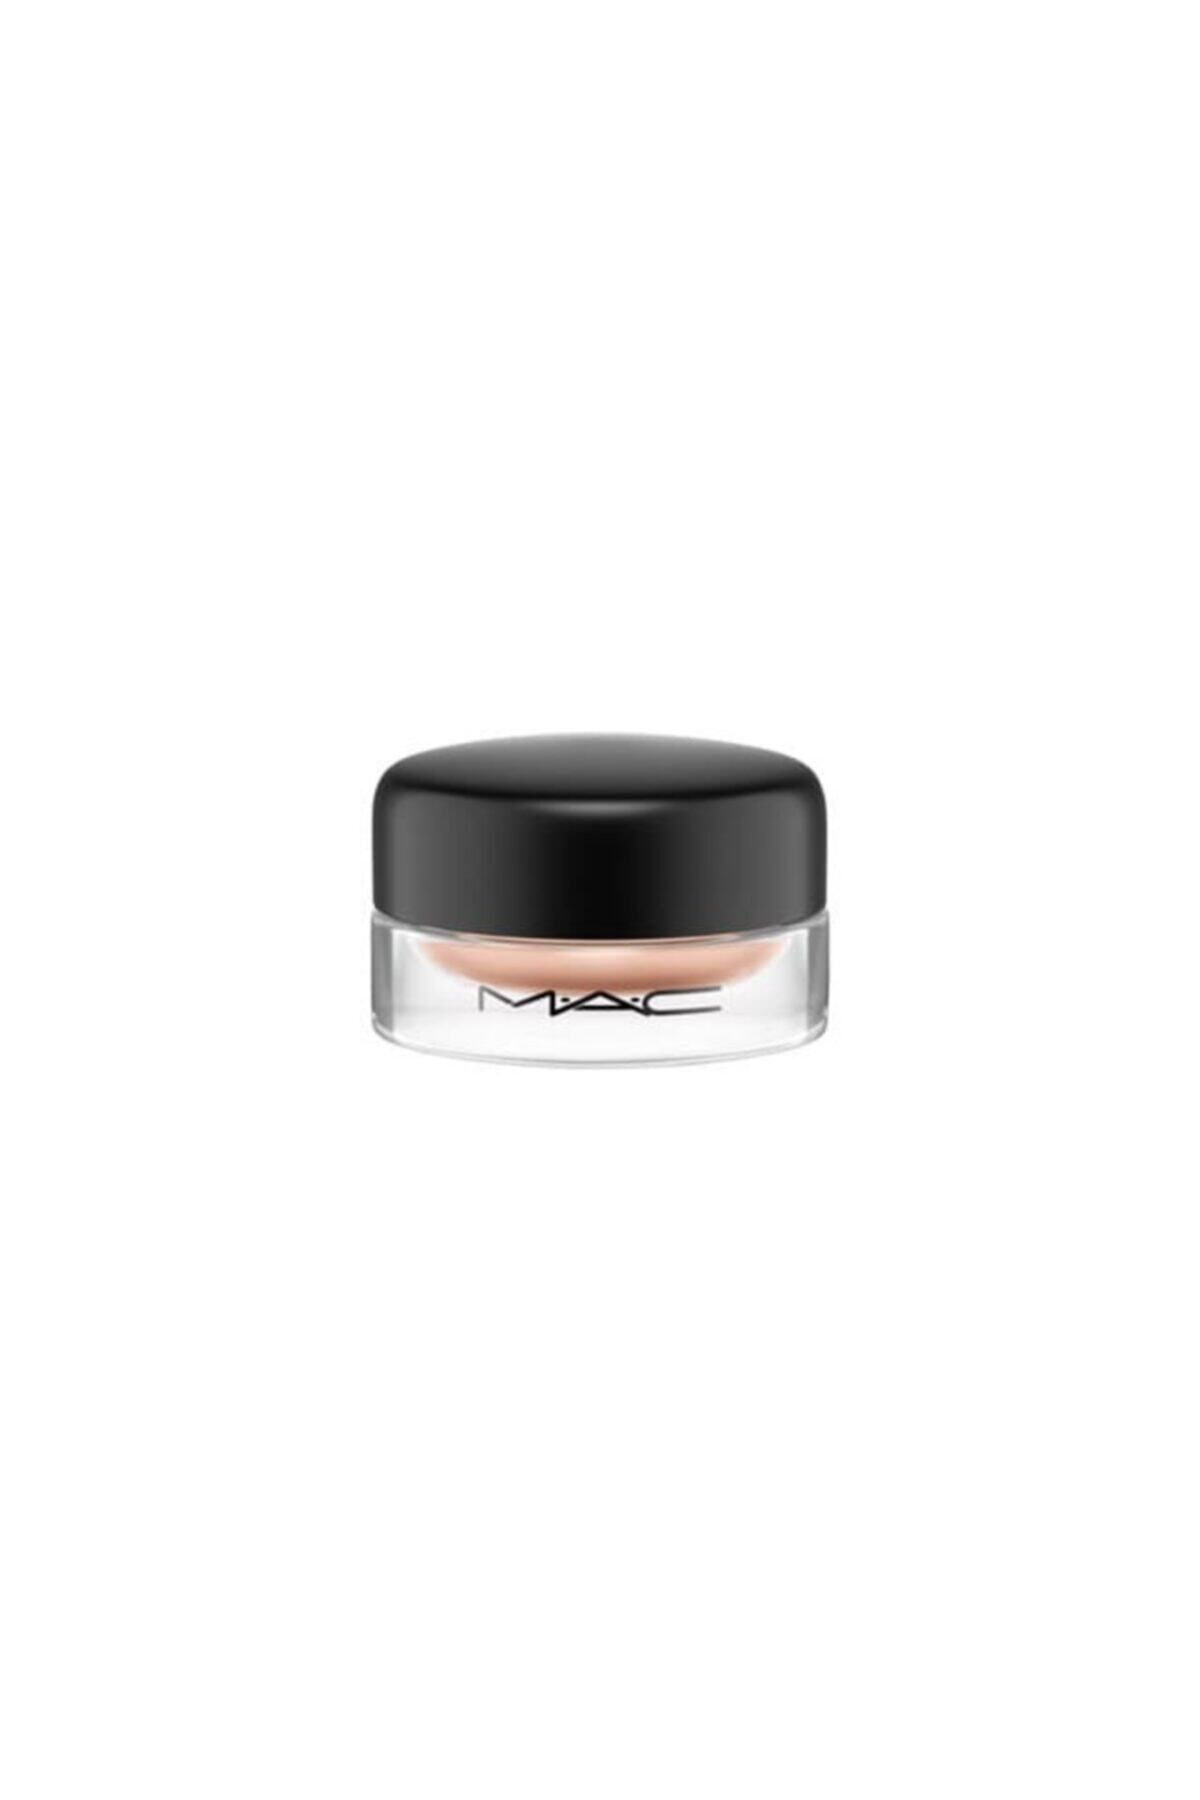 Mac Paint Pot - Painterly Cream Eyeshadow & Eyeshadow Base 5 gr DEMBA569